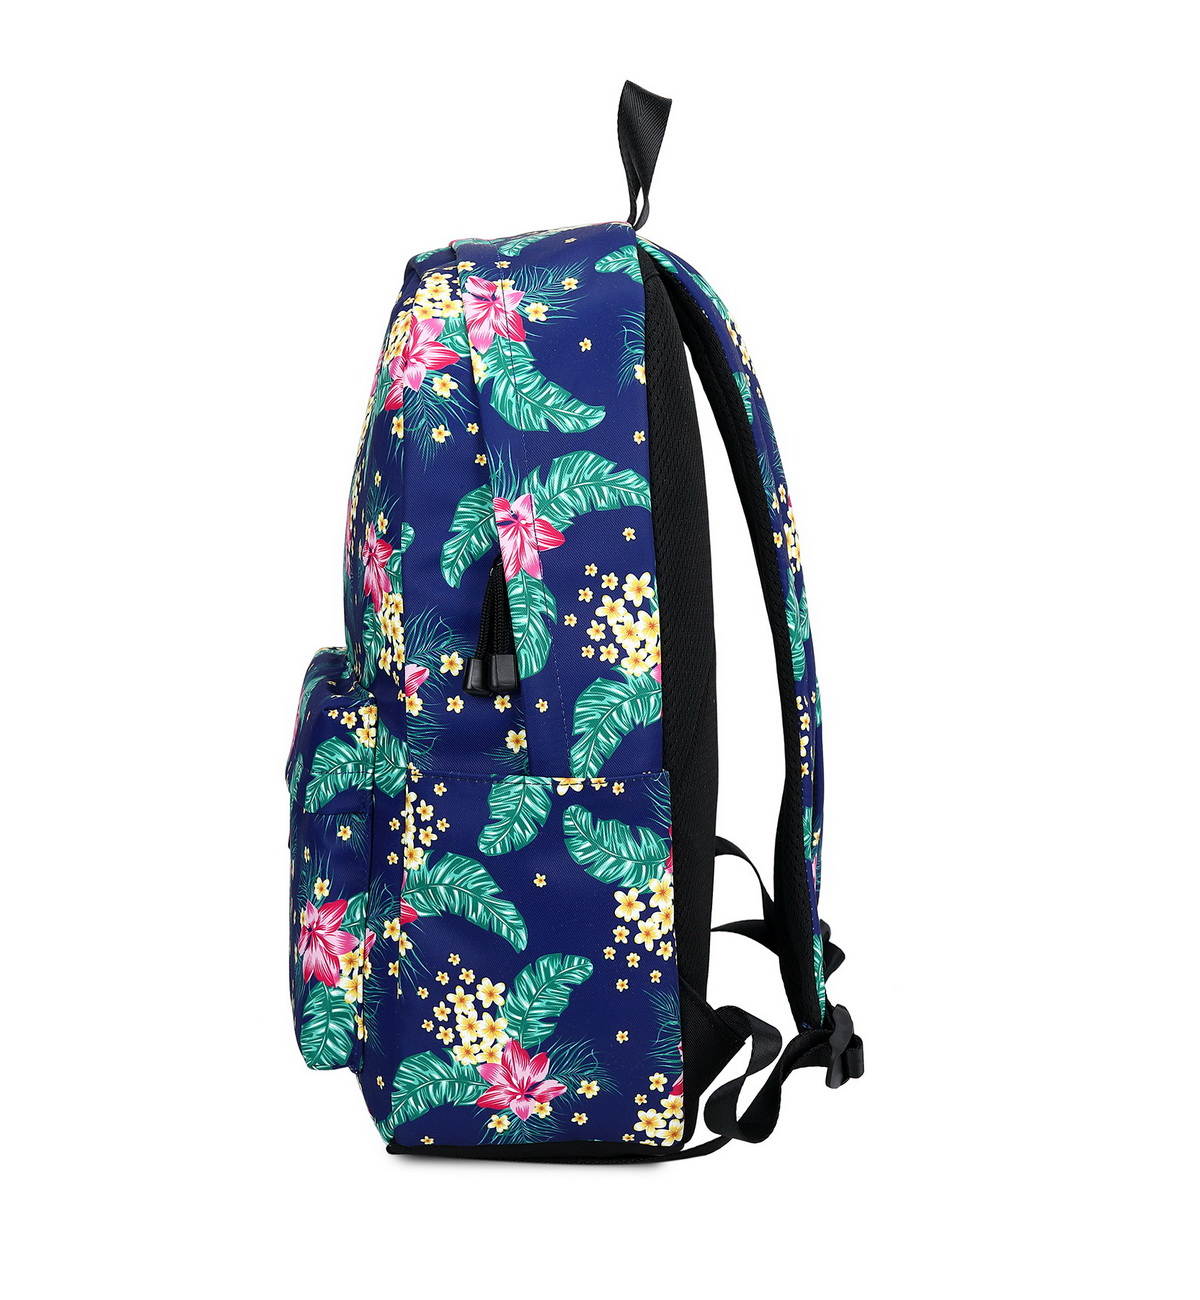 TERNBAY Roomy Cute Backpack for Teen Girl